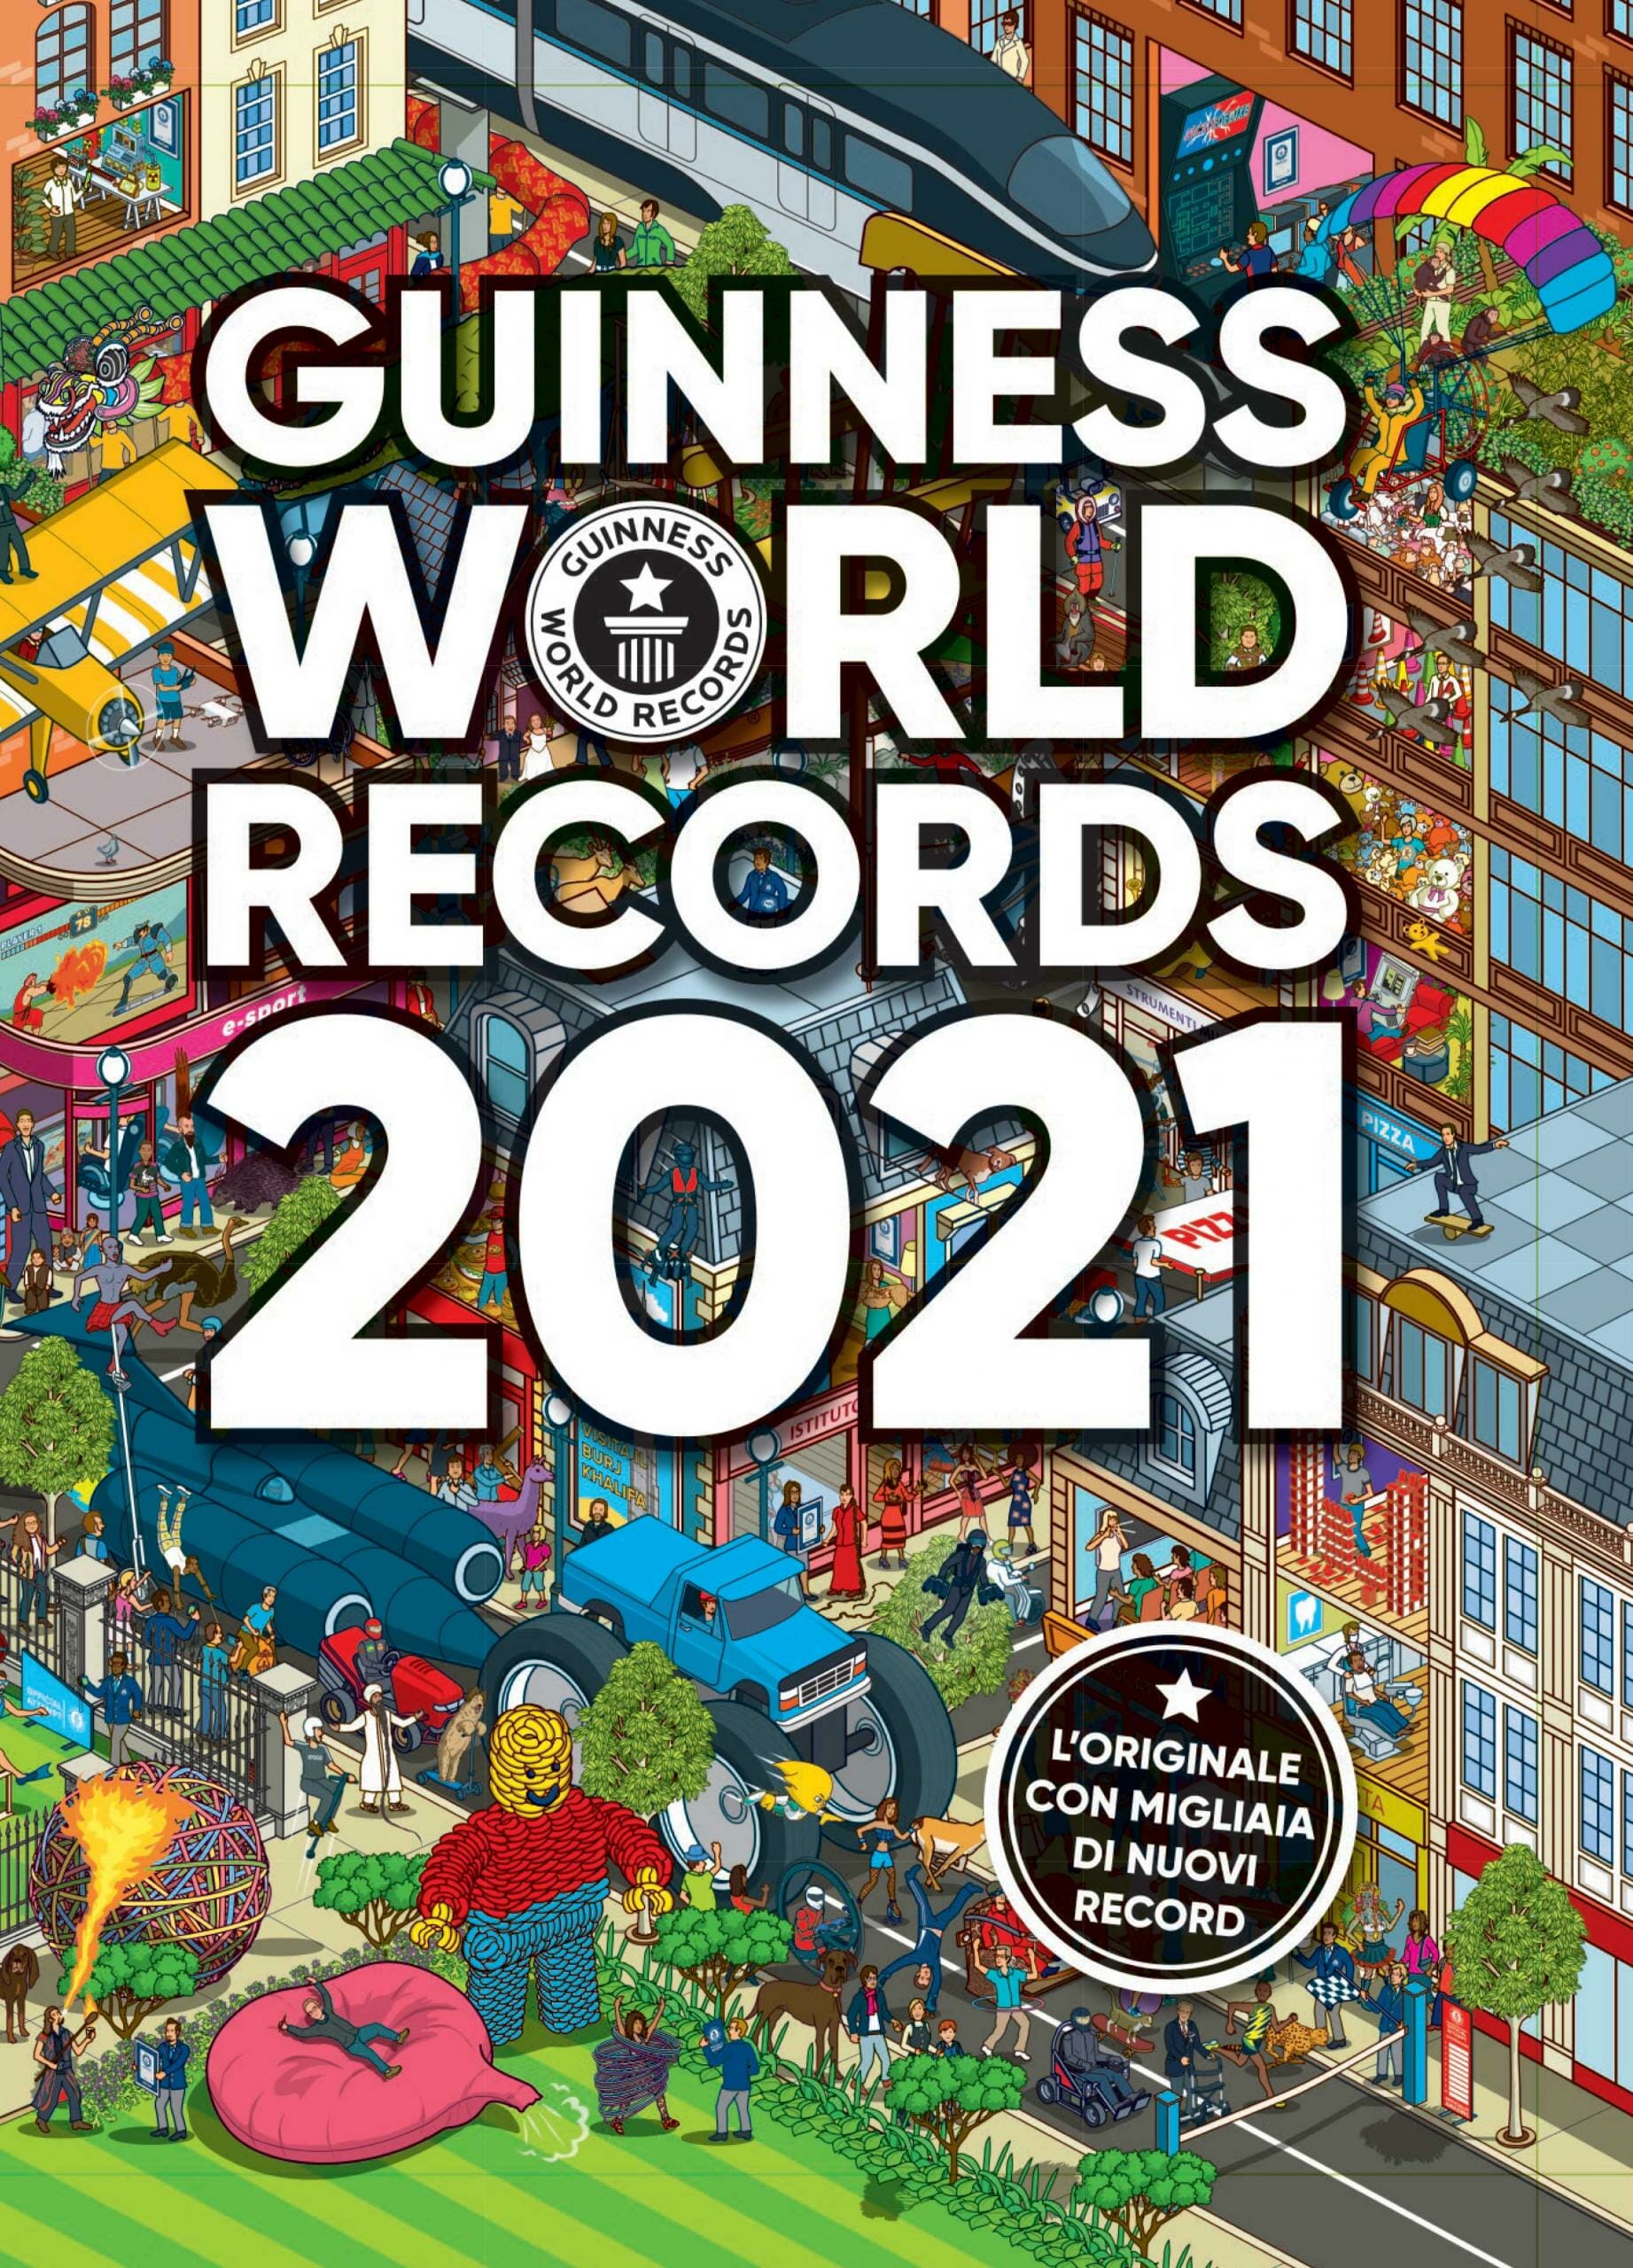  Guinness World Records 2021